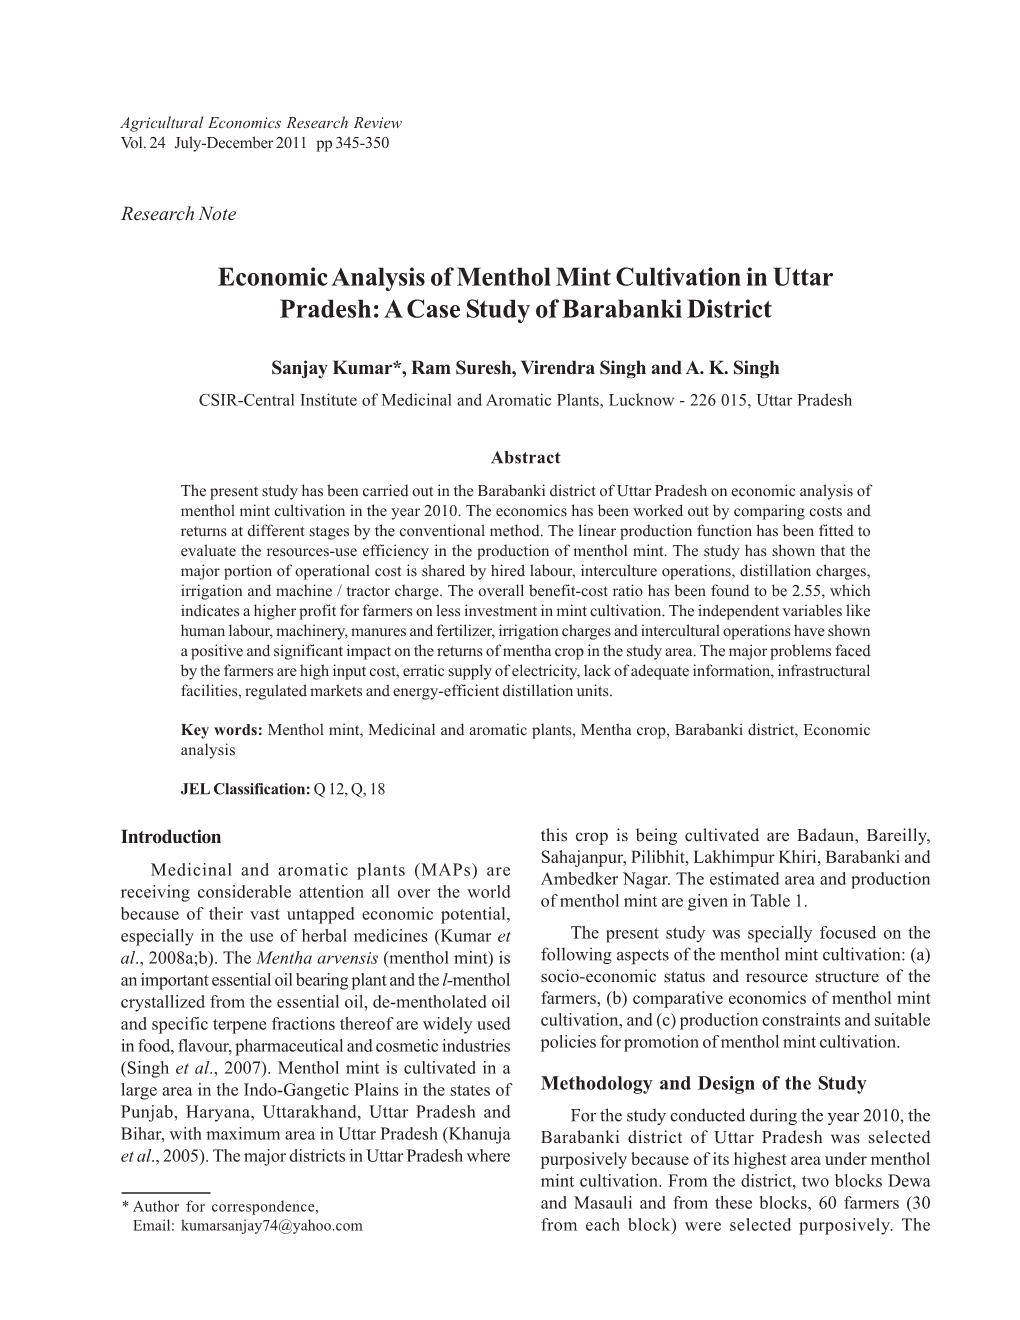 Economic Analysis of Menthol Mint Cultivation in Uttar Pradesh: a Case Study of Barabanki District